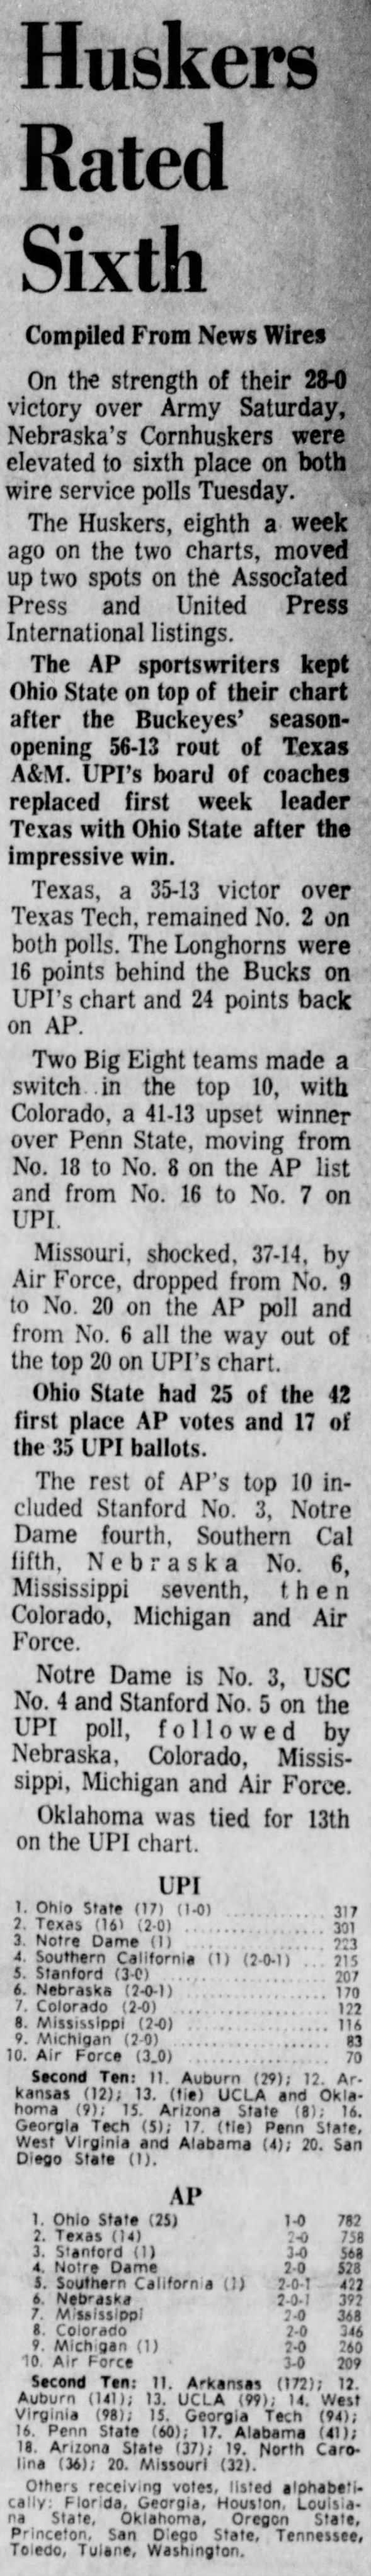 1970.09.29 AP & UPI polls